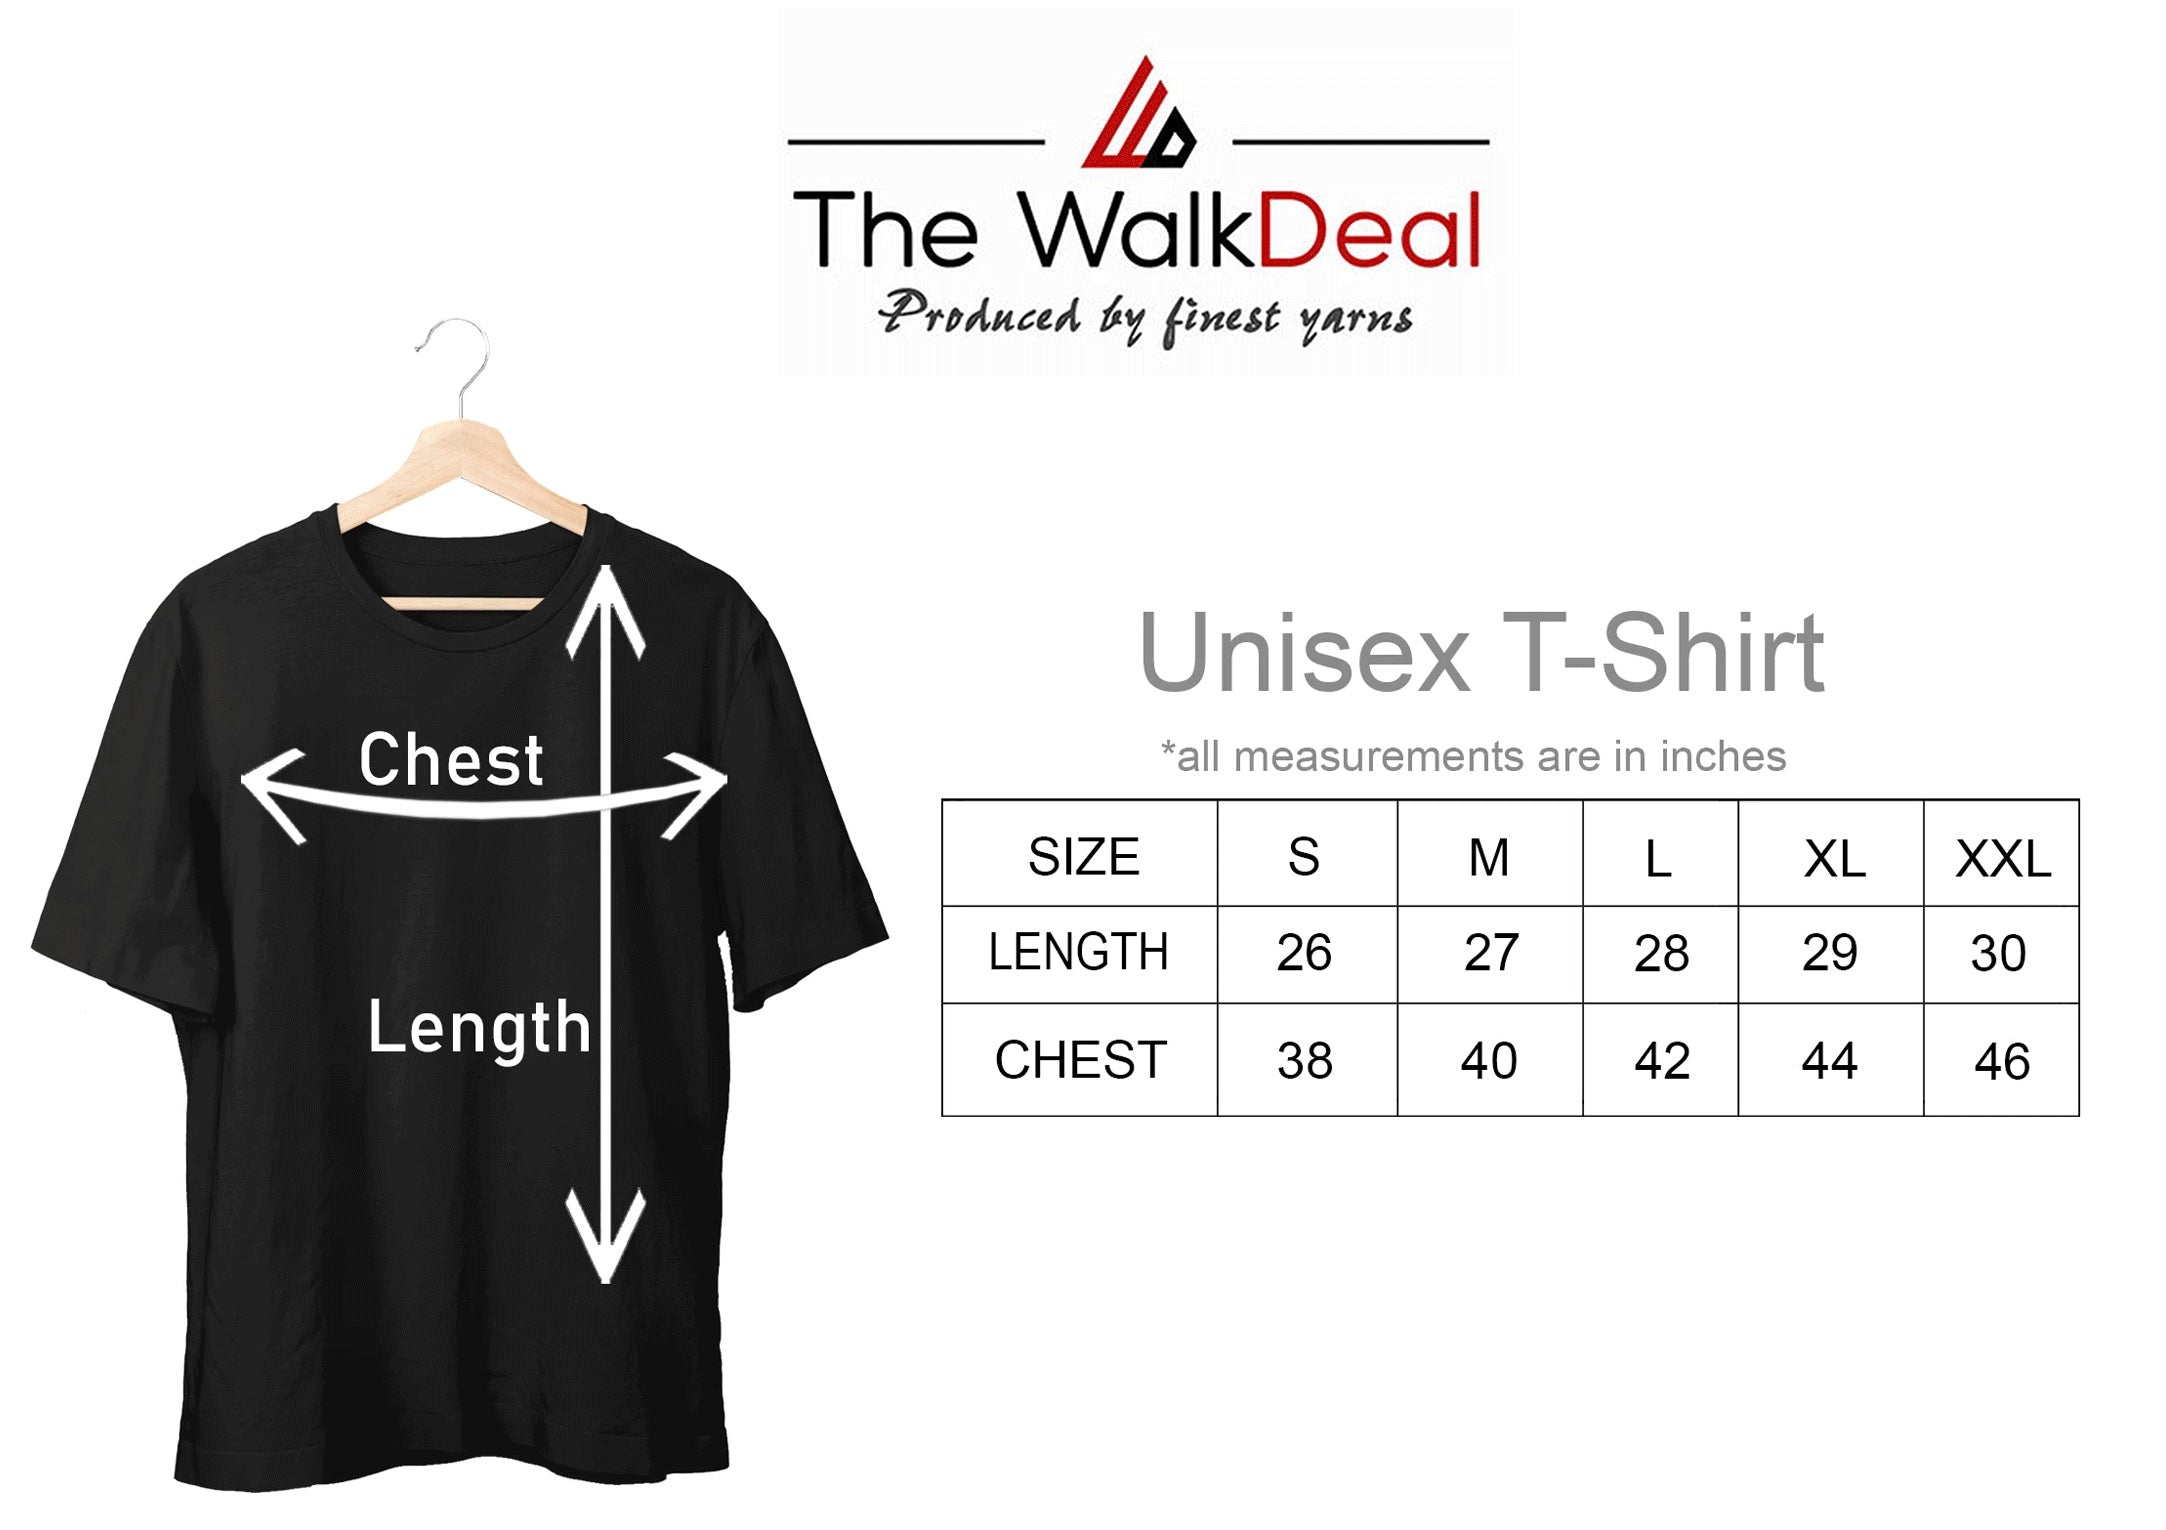 Steel_Grey Plain T-Shirts For Unisex